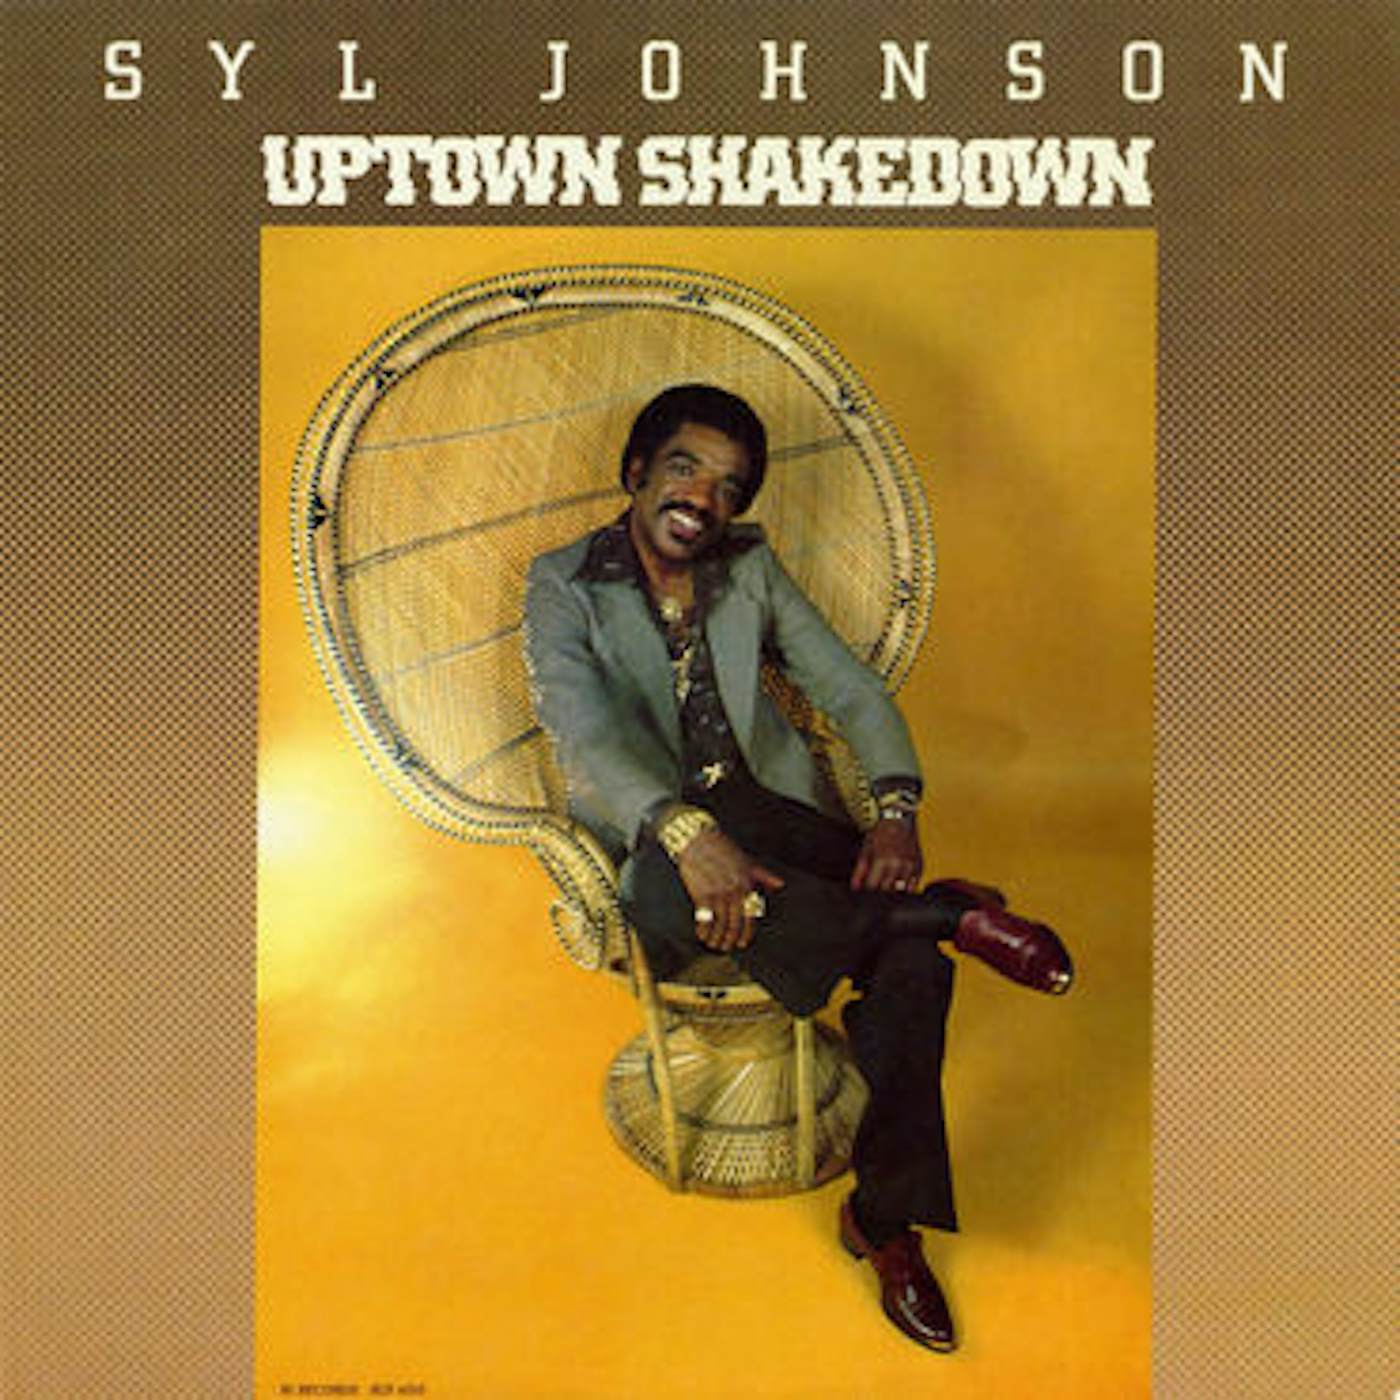 Syl Johnson Uptown Shakedown Vinyl Record